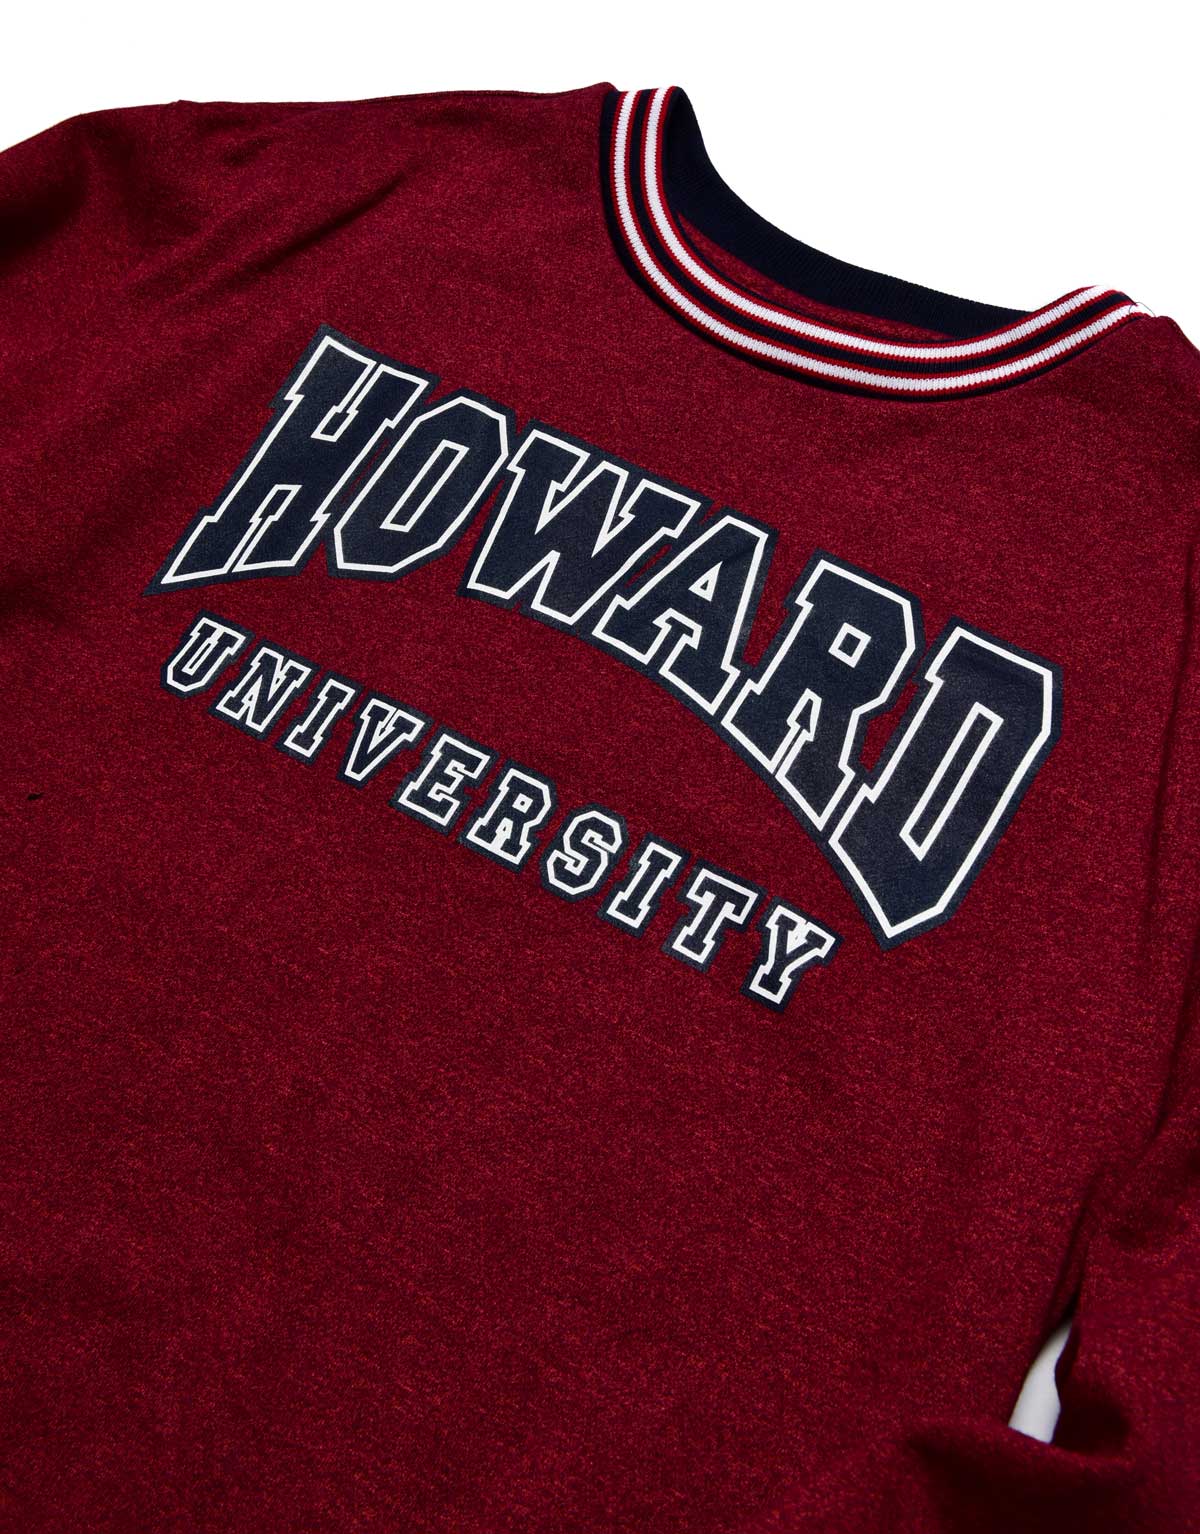 howard university jersey